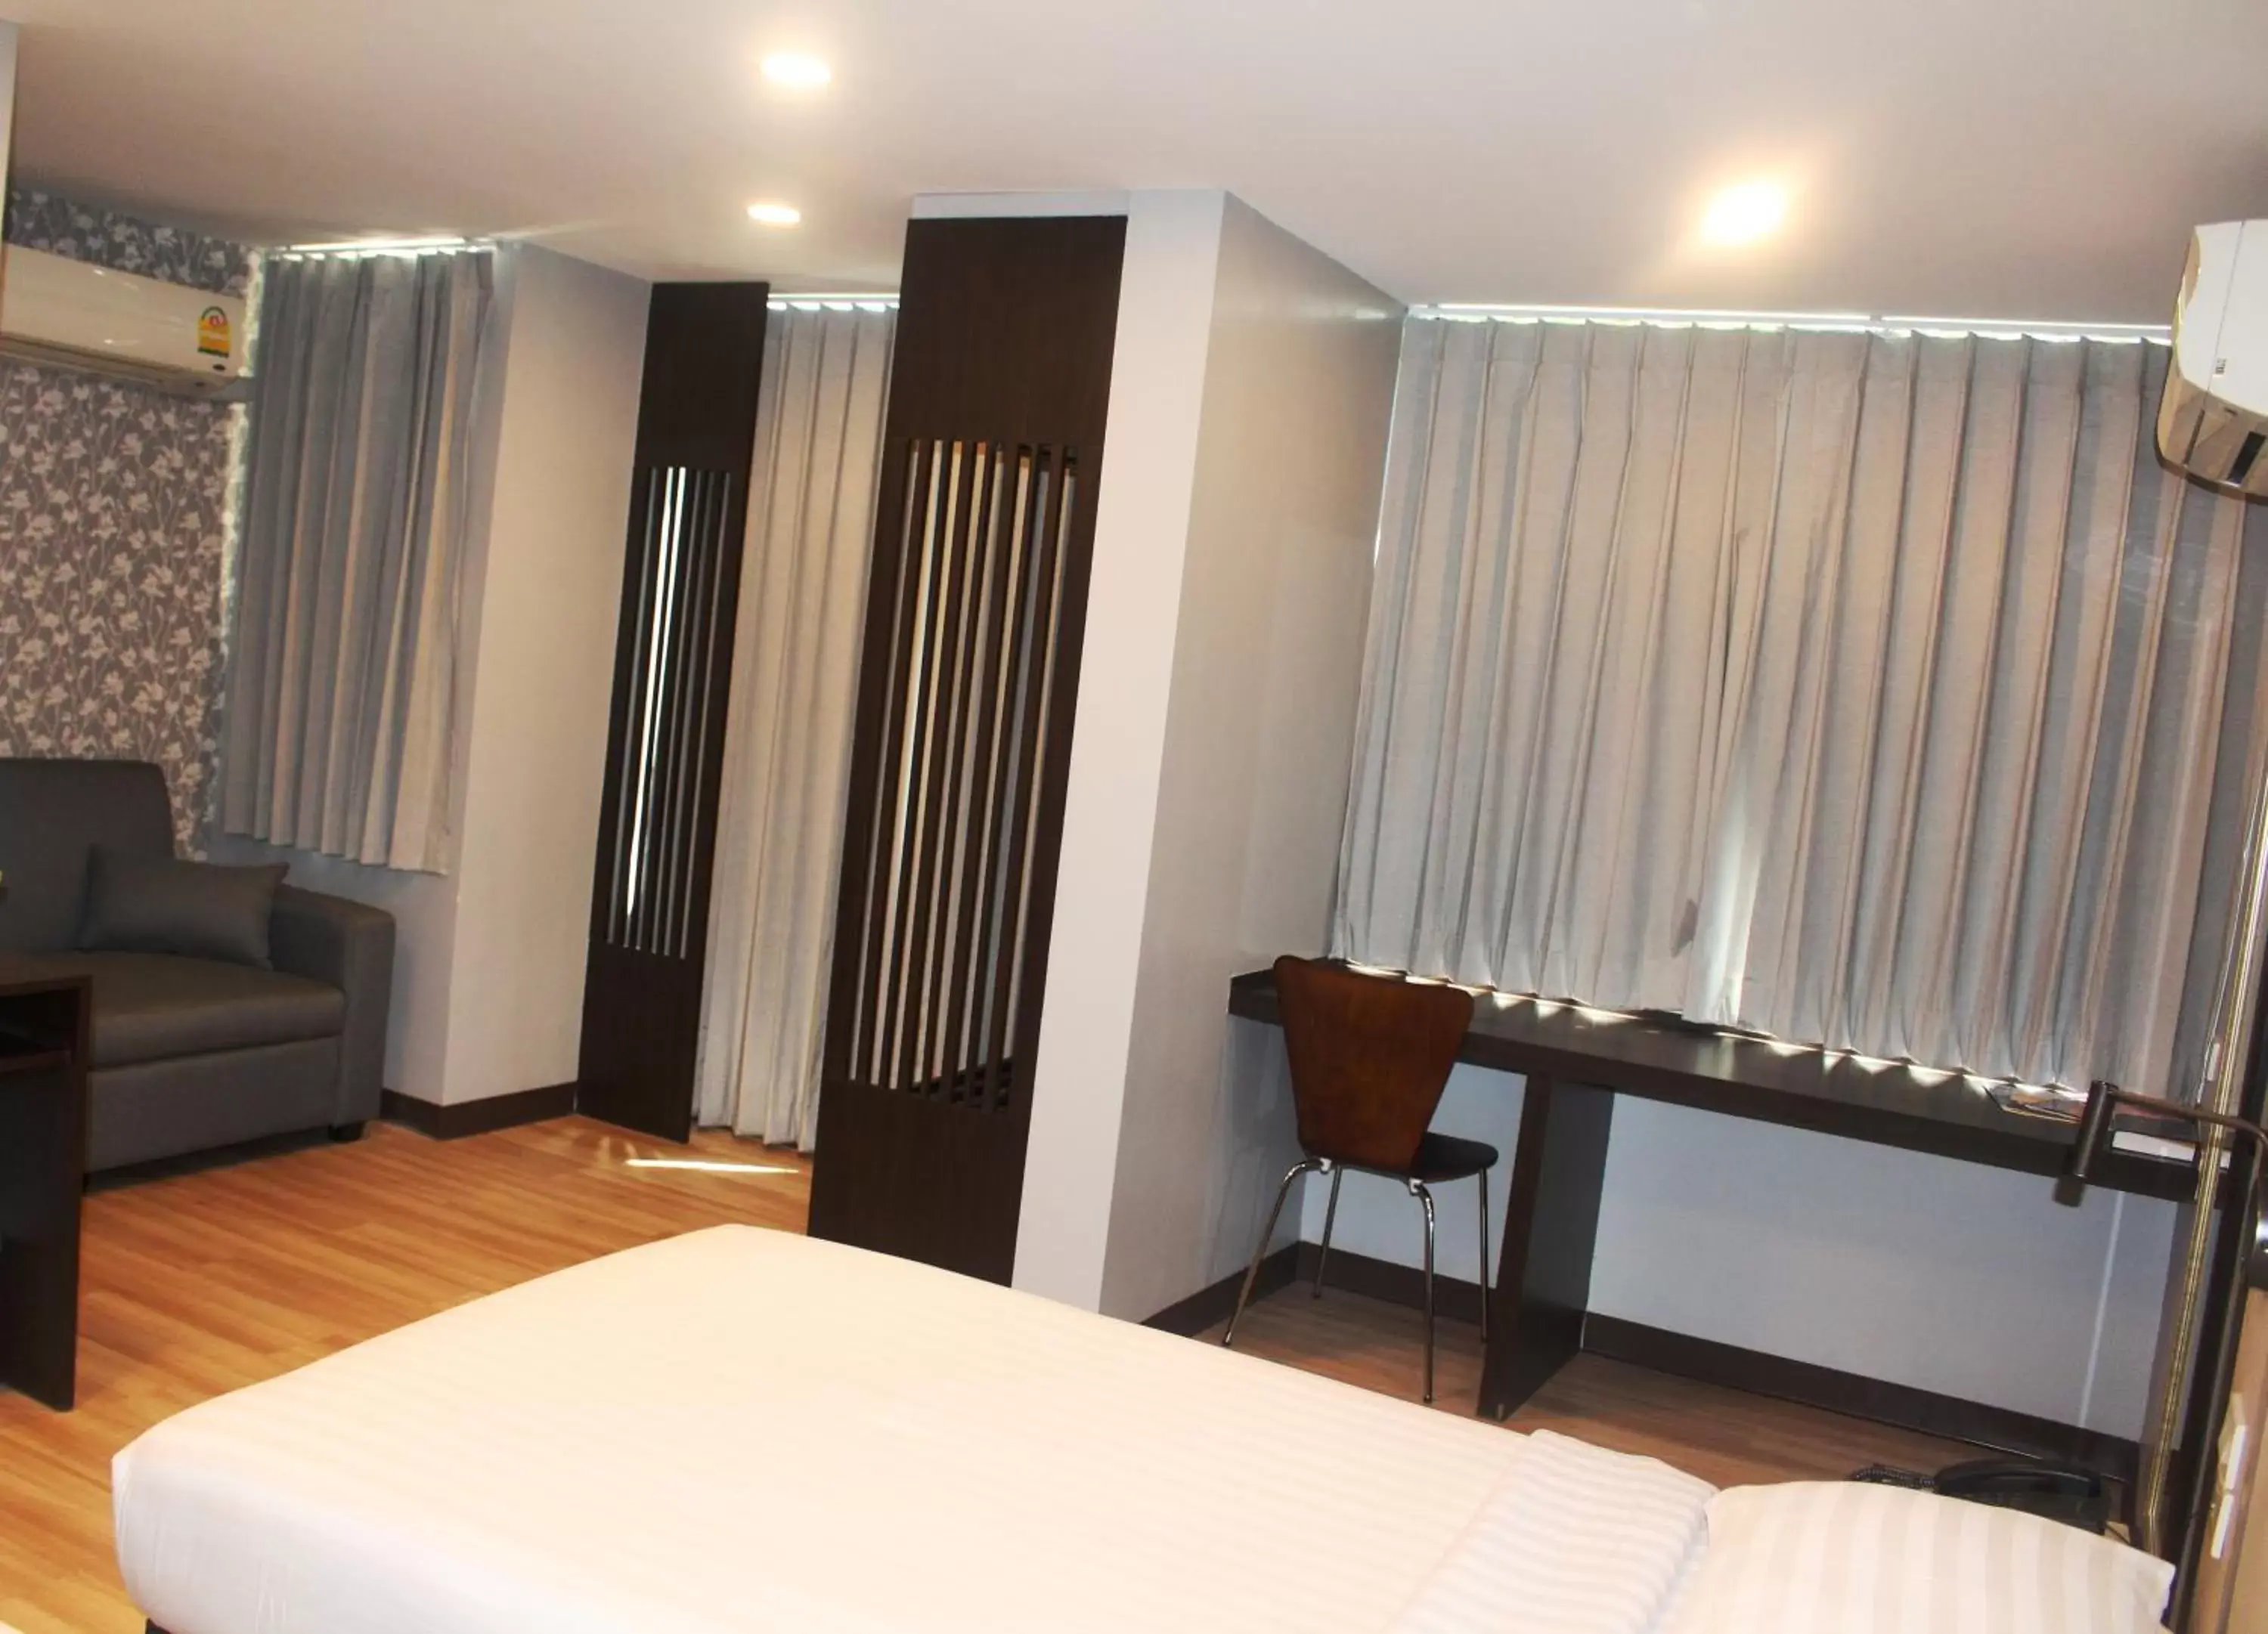 Bed in YWCA Hotel Bangkok